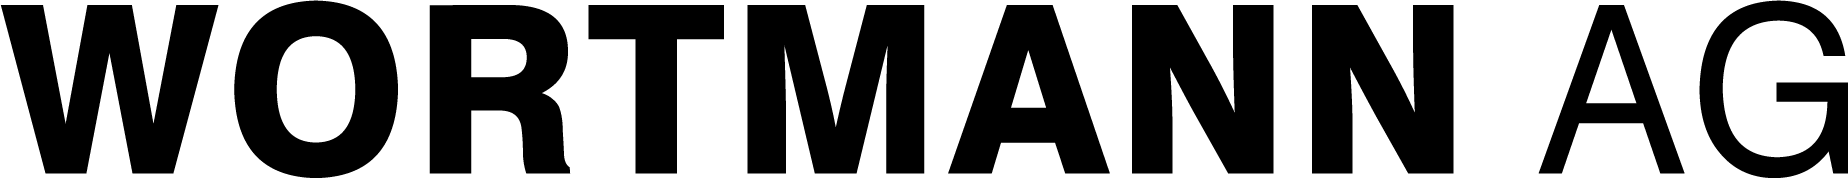 logo wortmann